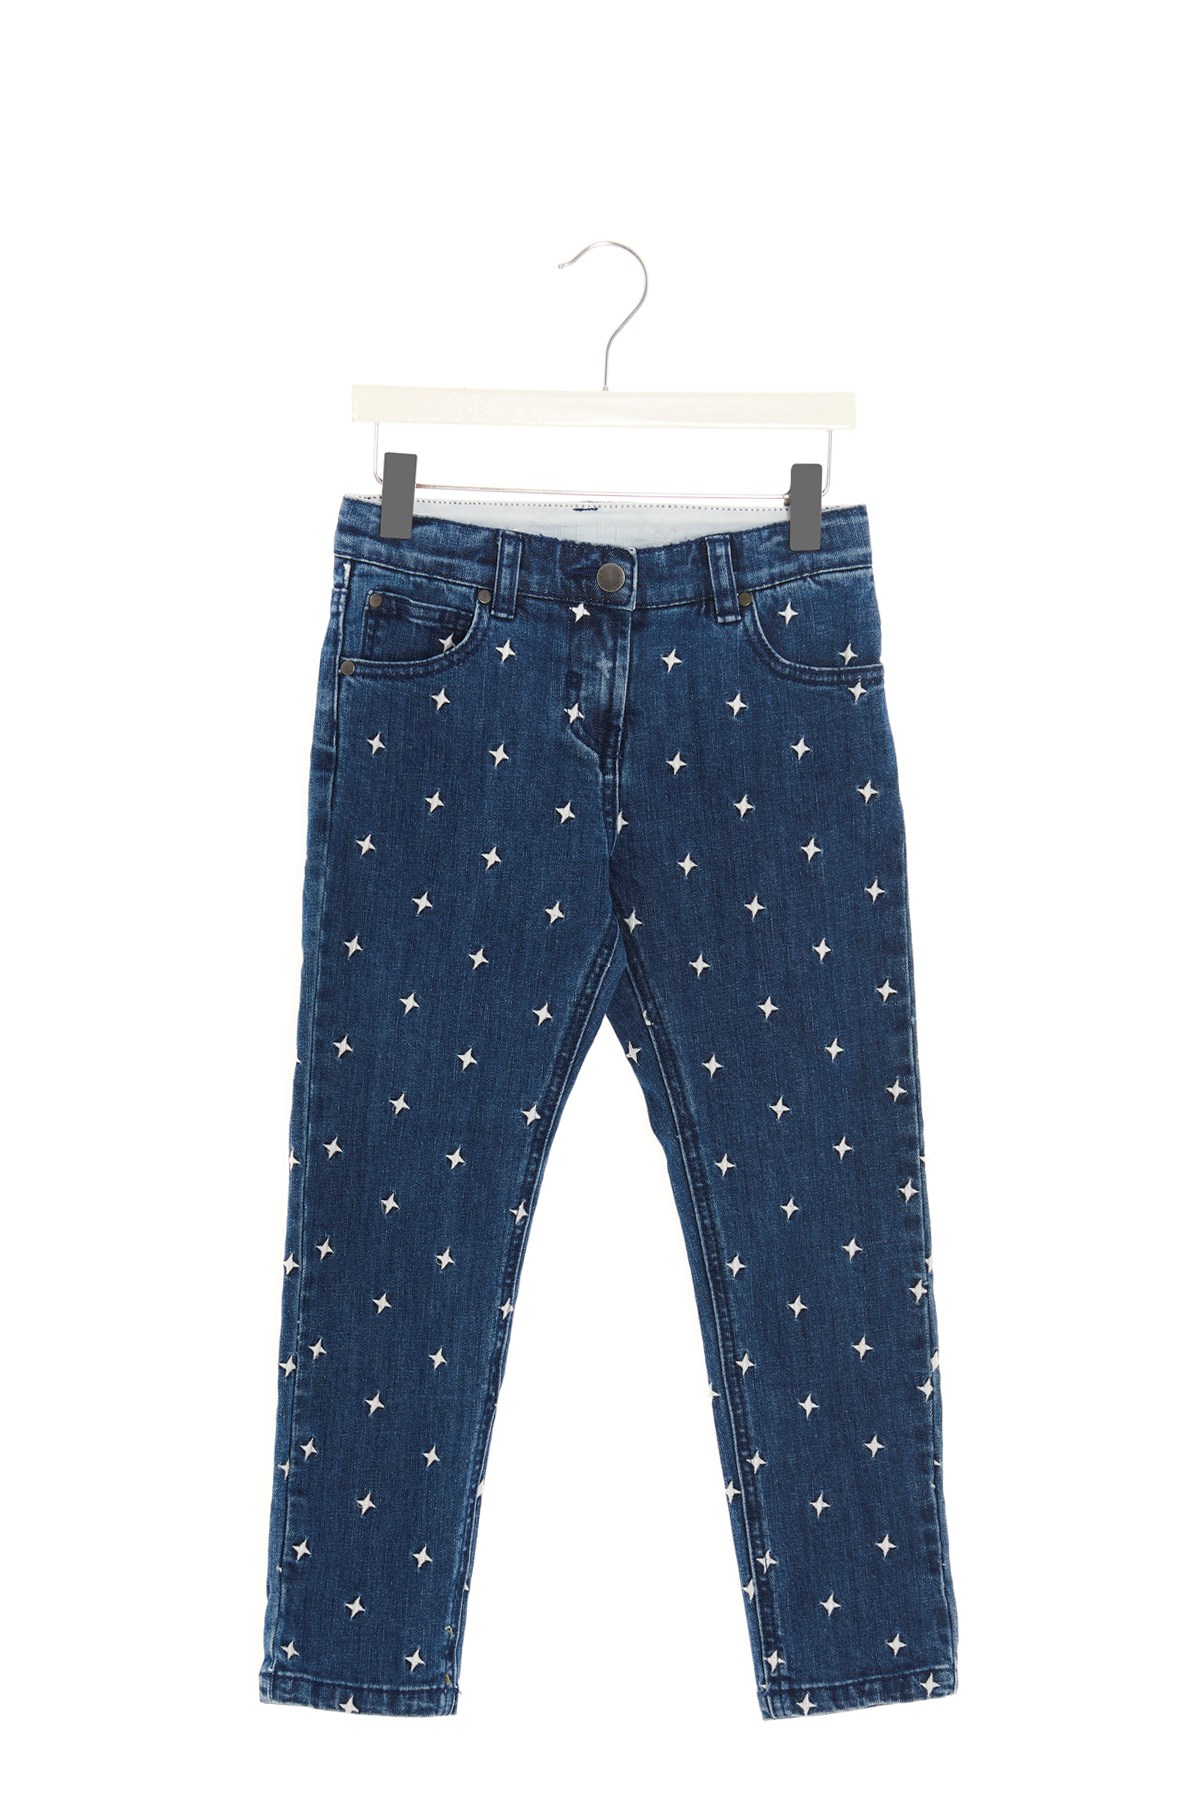 STELLA MCCARTNEY 'Stars' Jeans